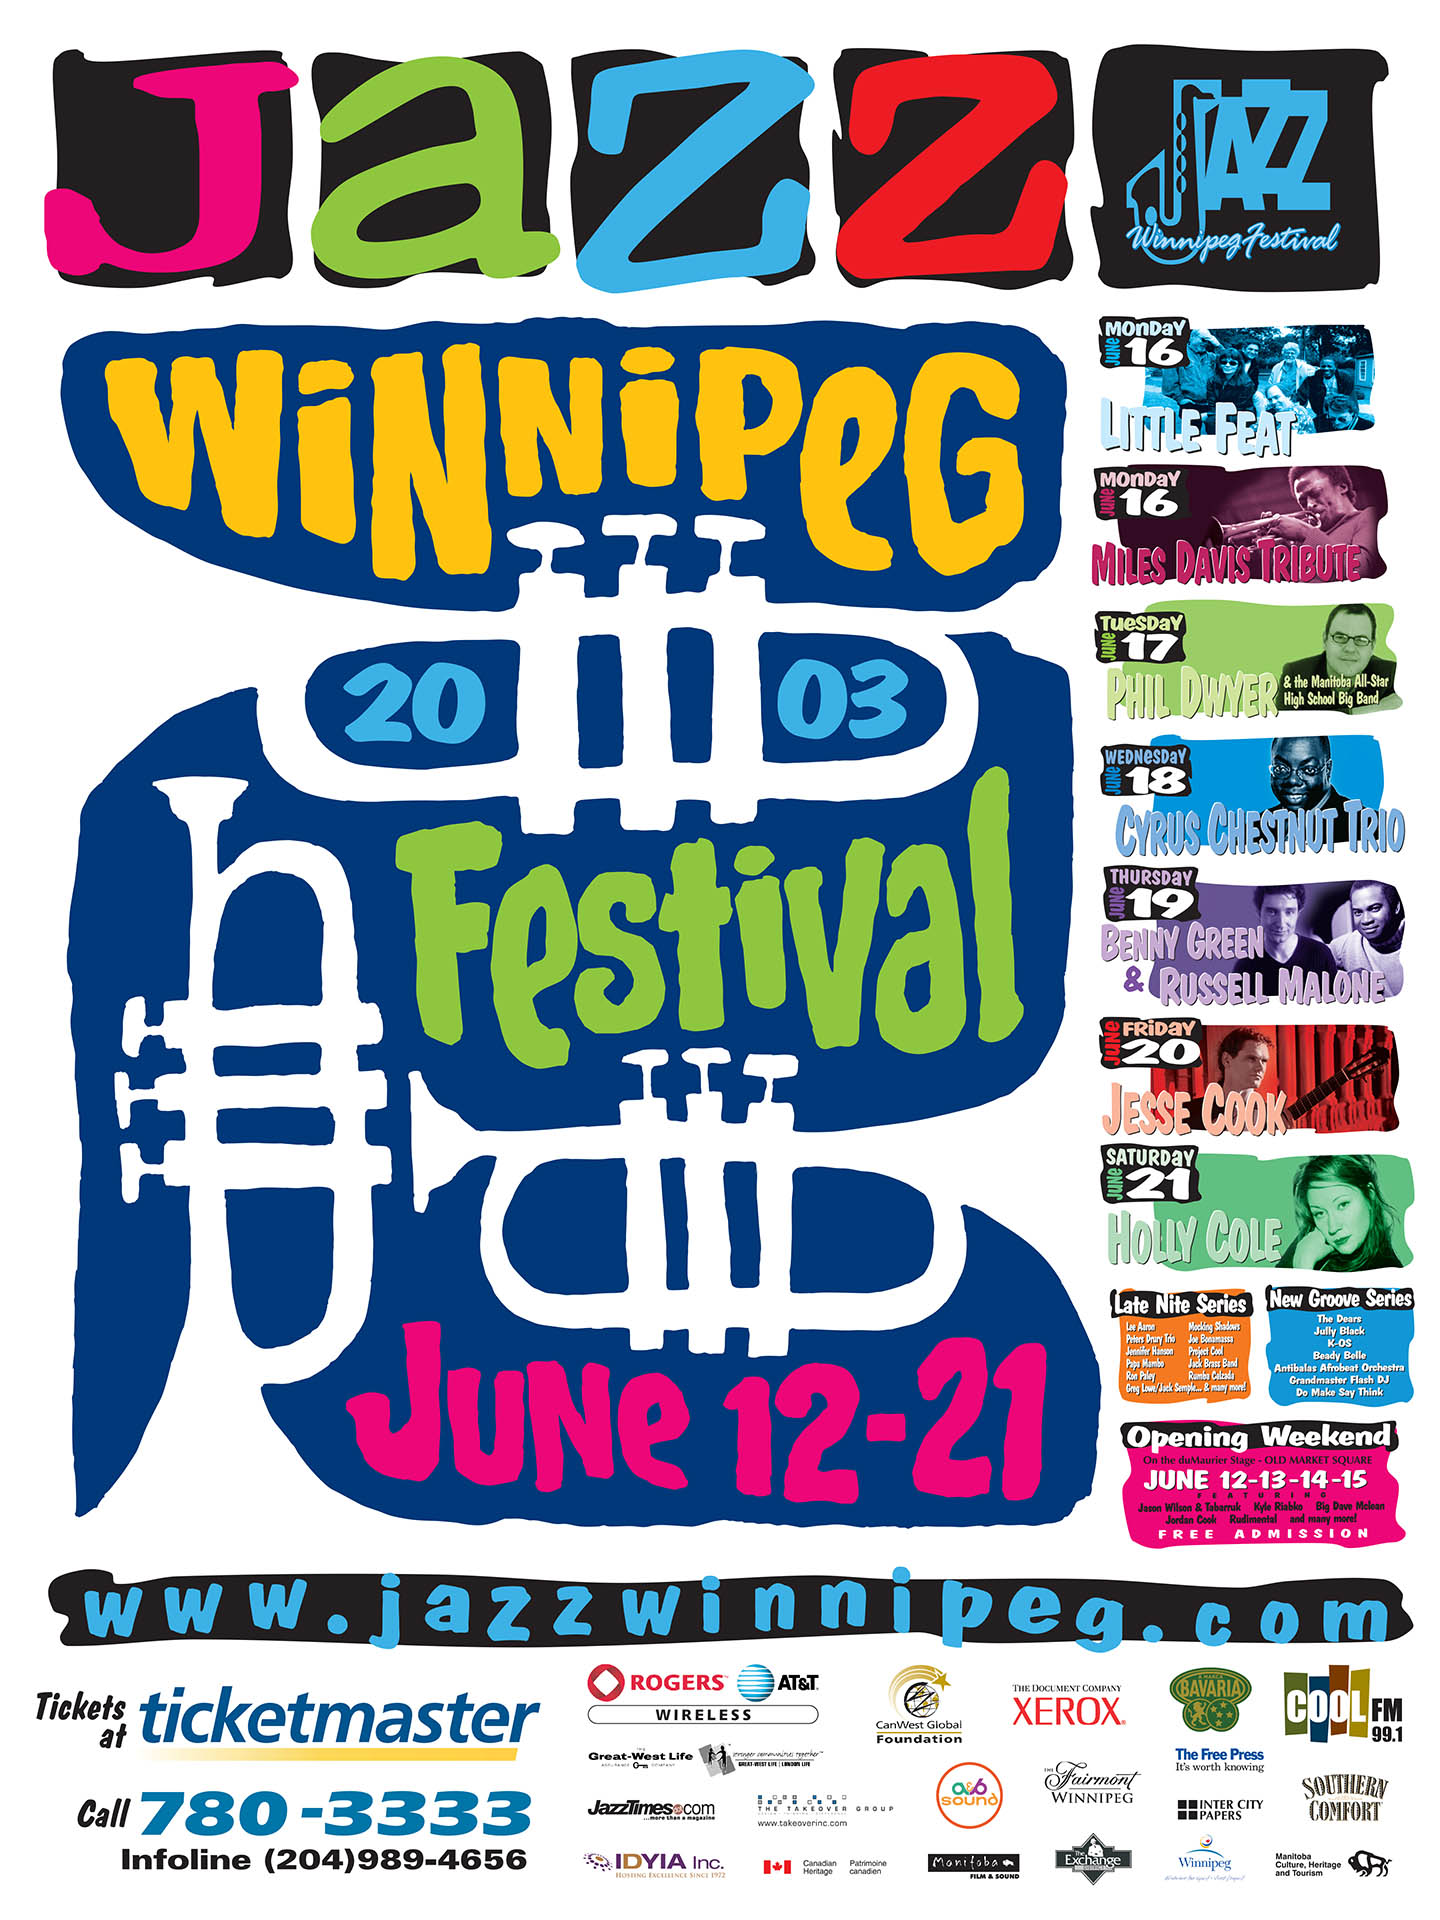 Winnipeg Jazz Festival – 2003